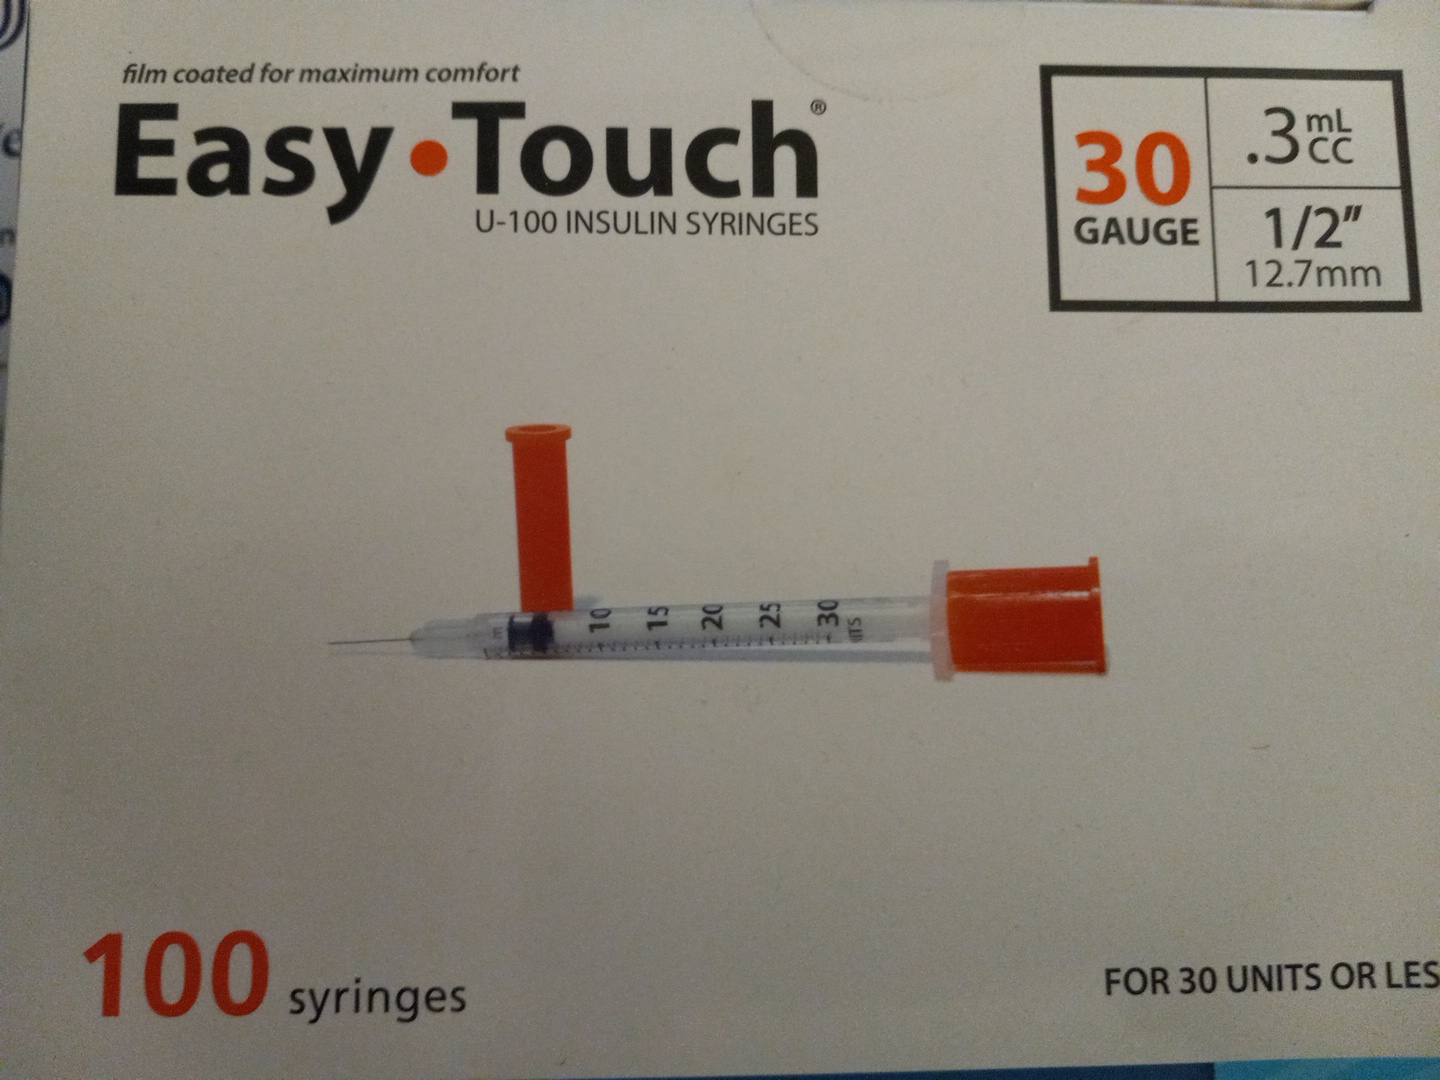 easy touch syringe photo.jpg